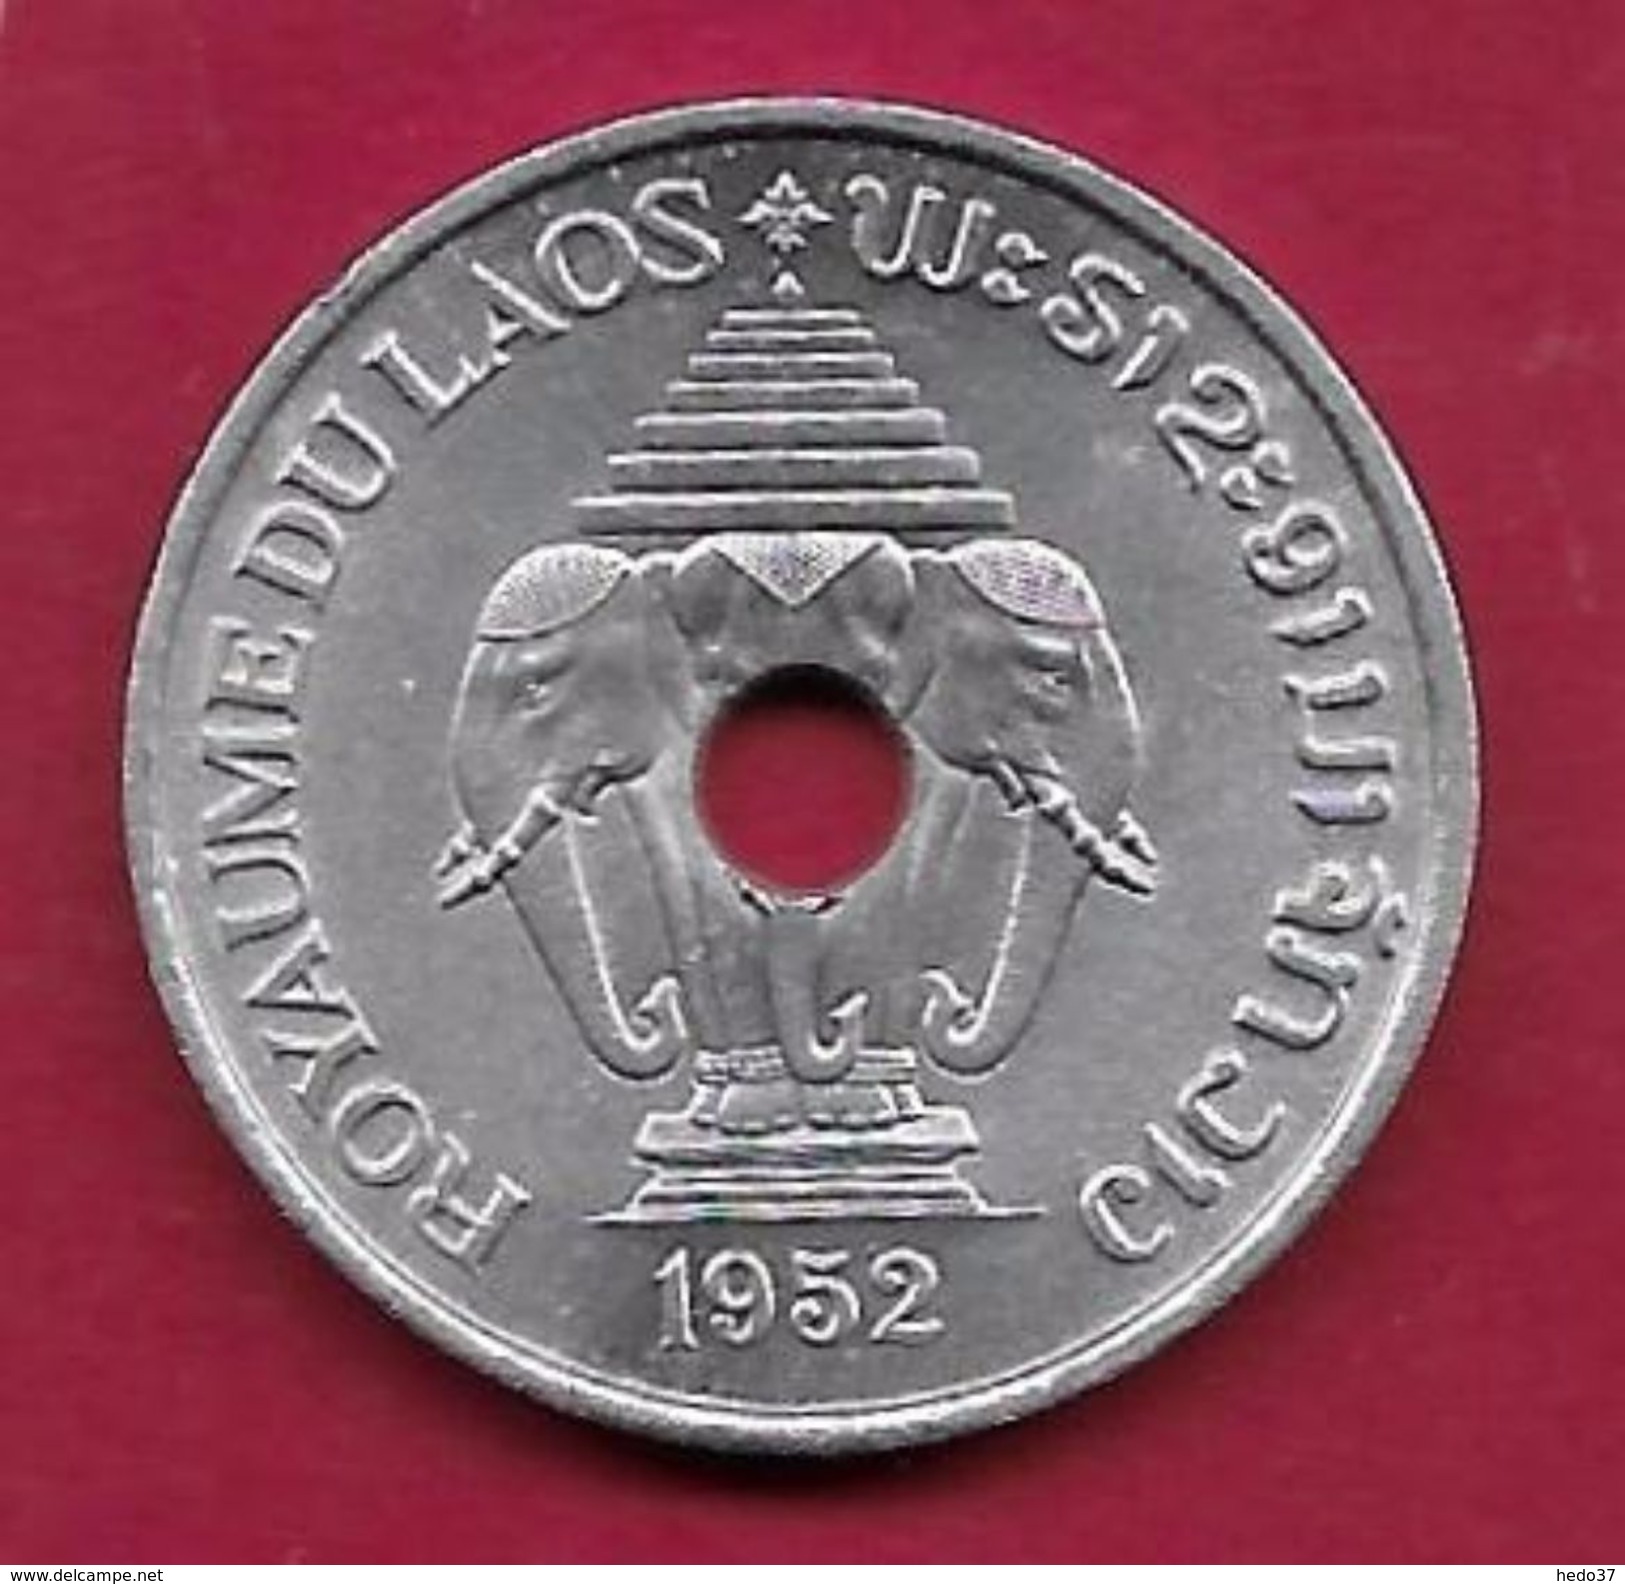 Laos - 20 Cents -1952 - Laos